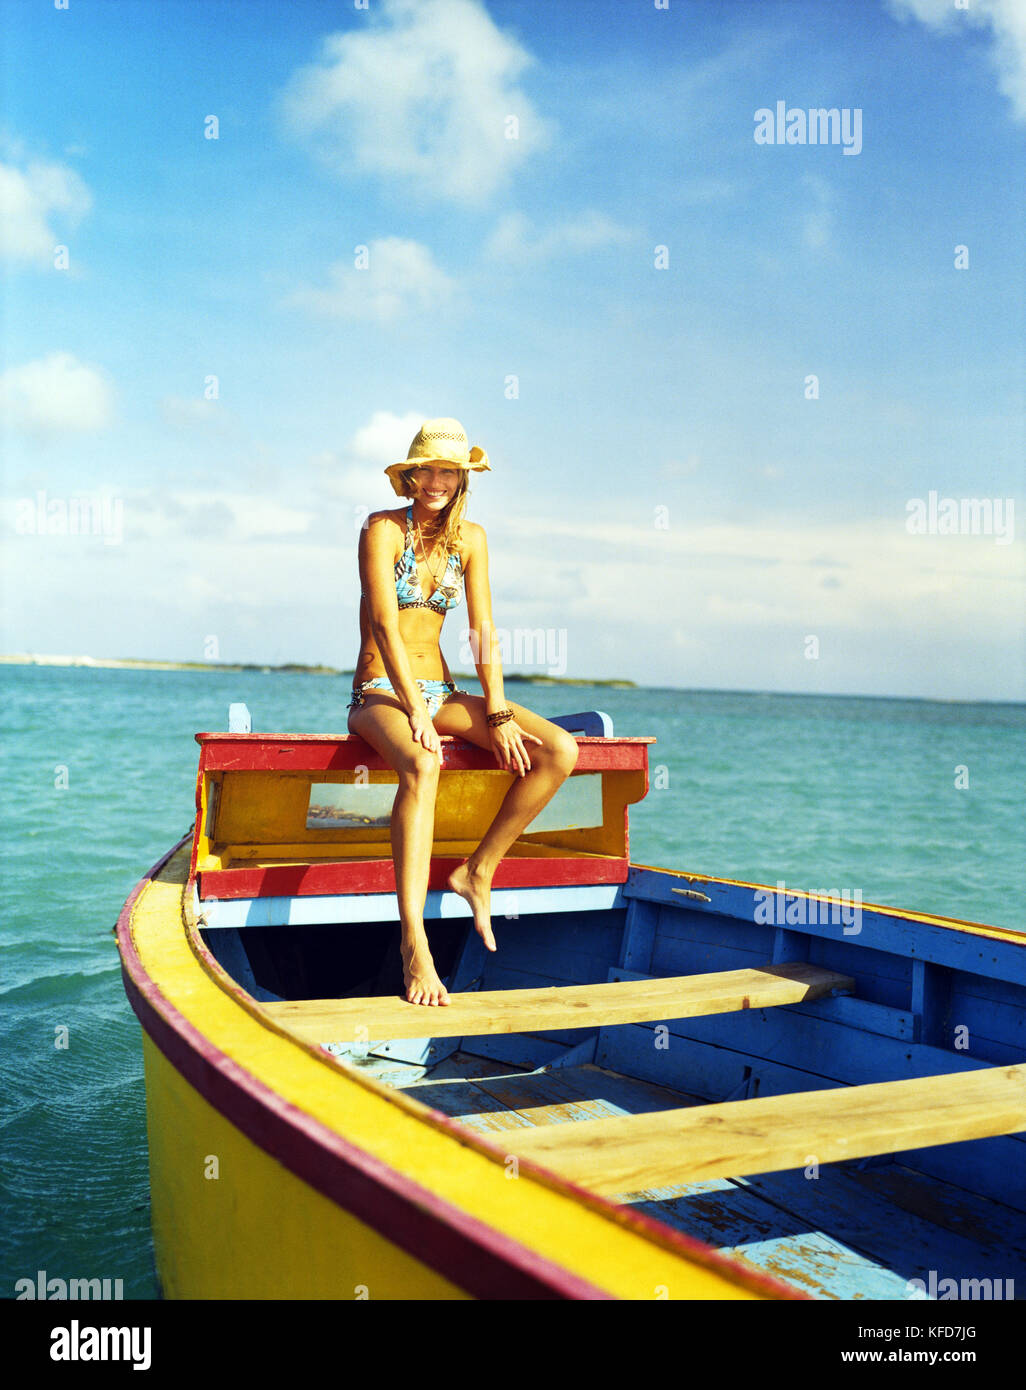 Aruba, young woman in bikini relaxing on fishing boat Stock Photo